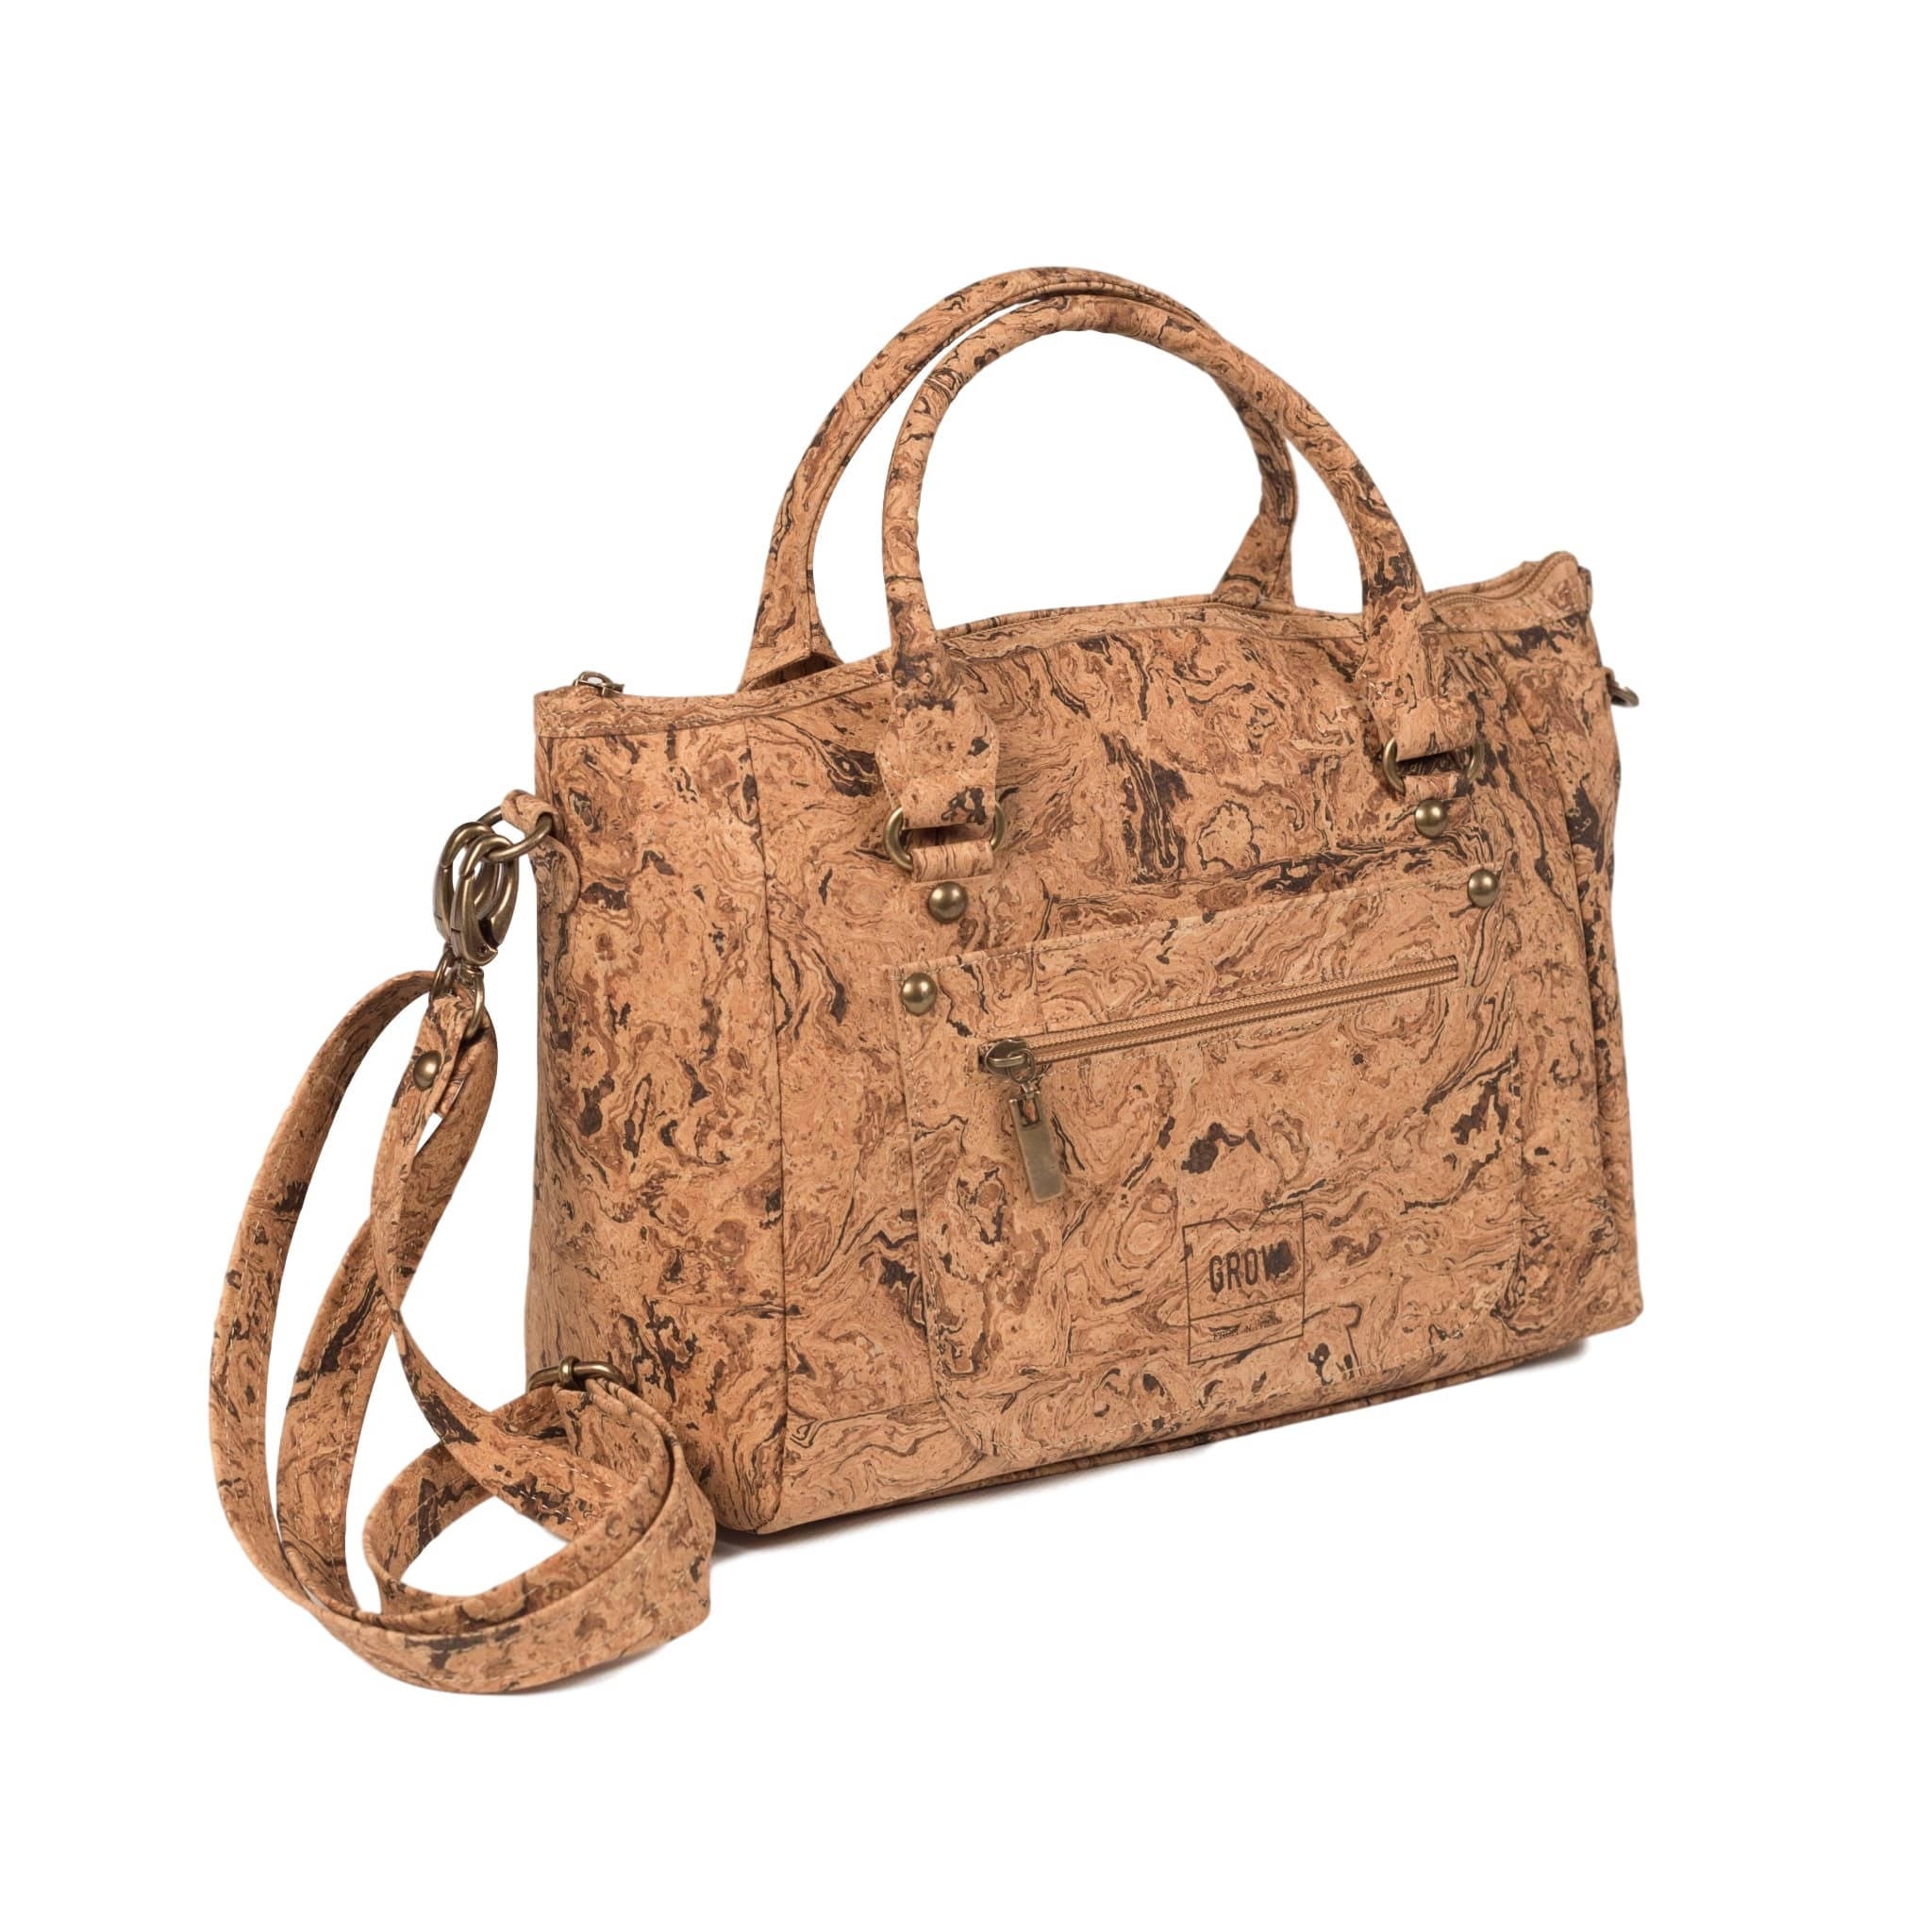 Handbag plus crossbody bag Made of Cork Vegan Leather Vegan | Etsy